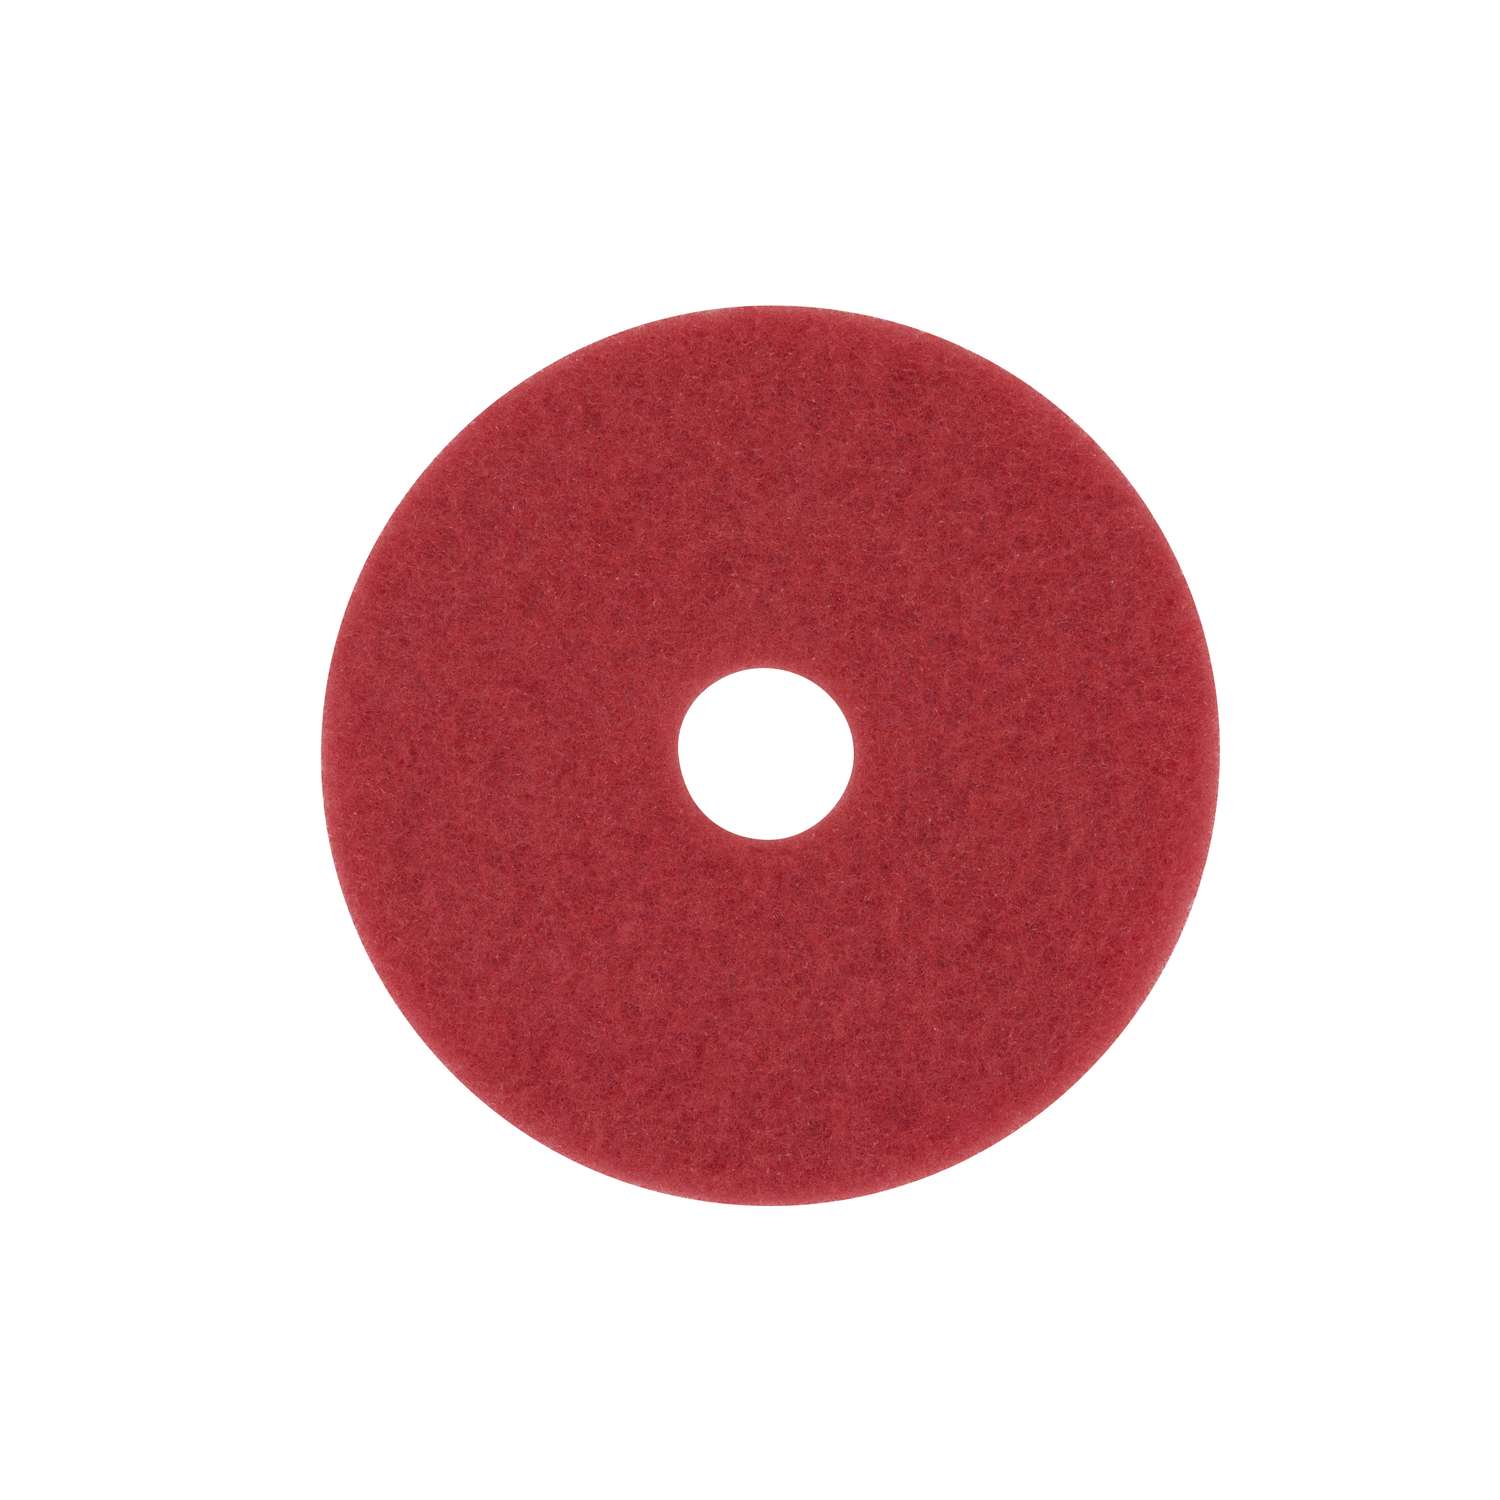 3M 5100 Red Buffer Pad, 20 in, 5/Case